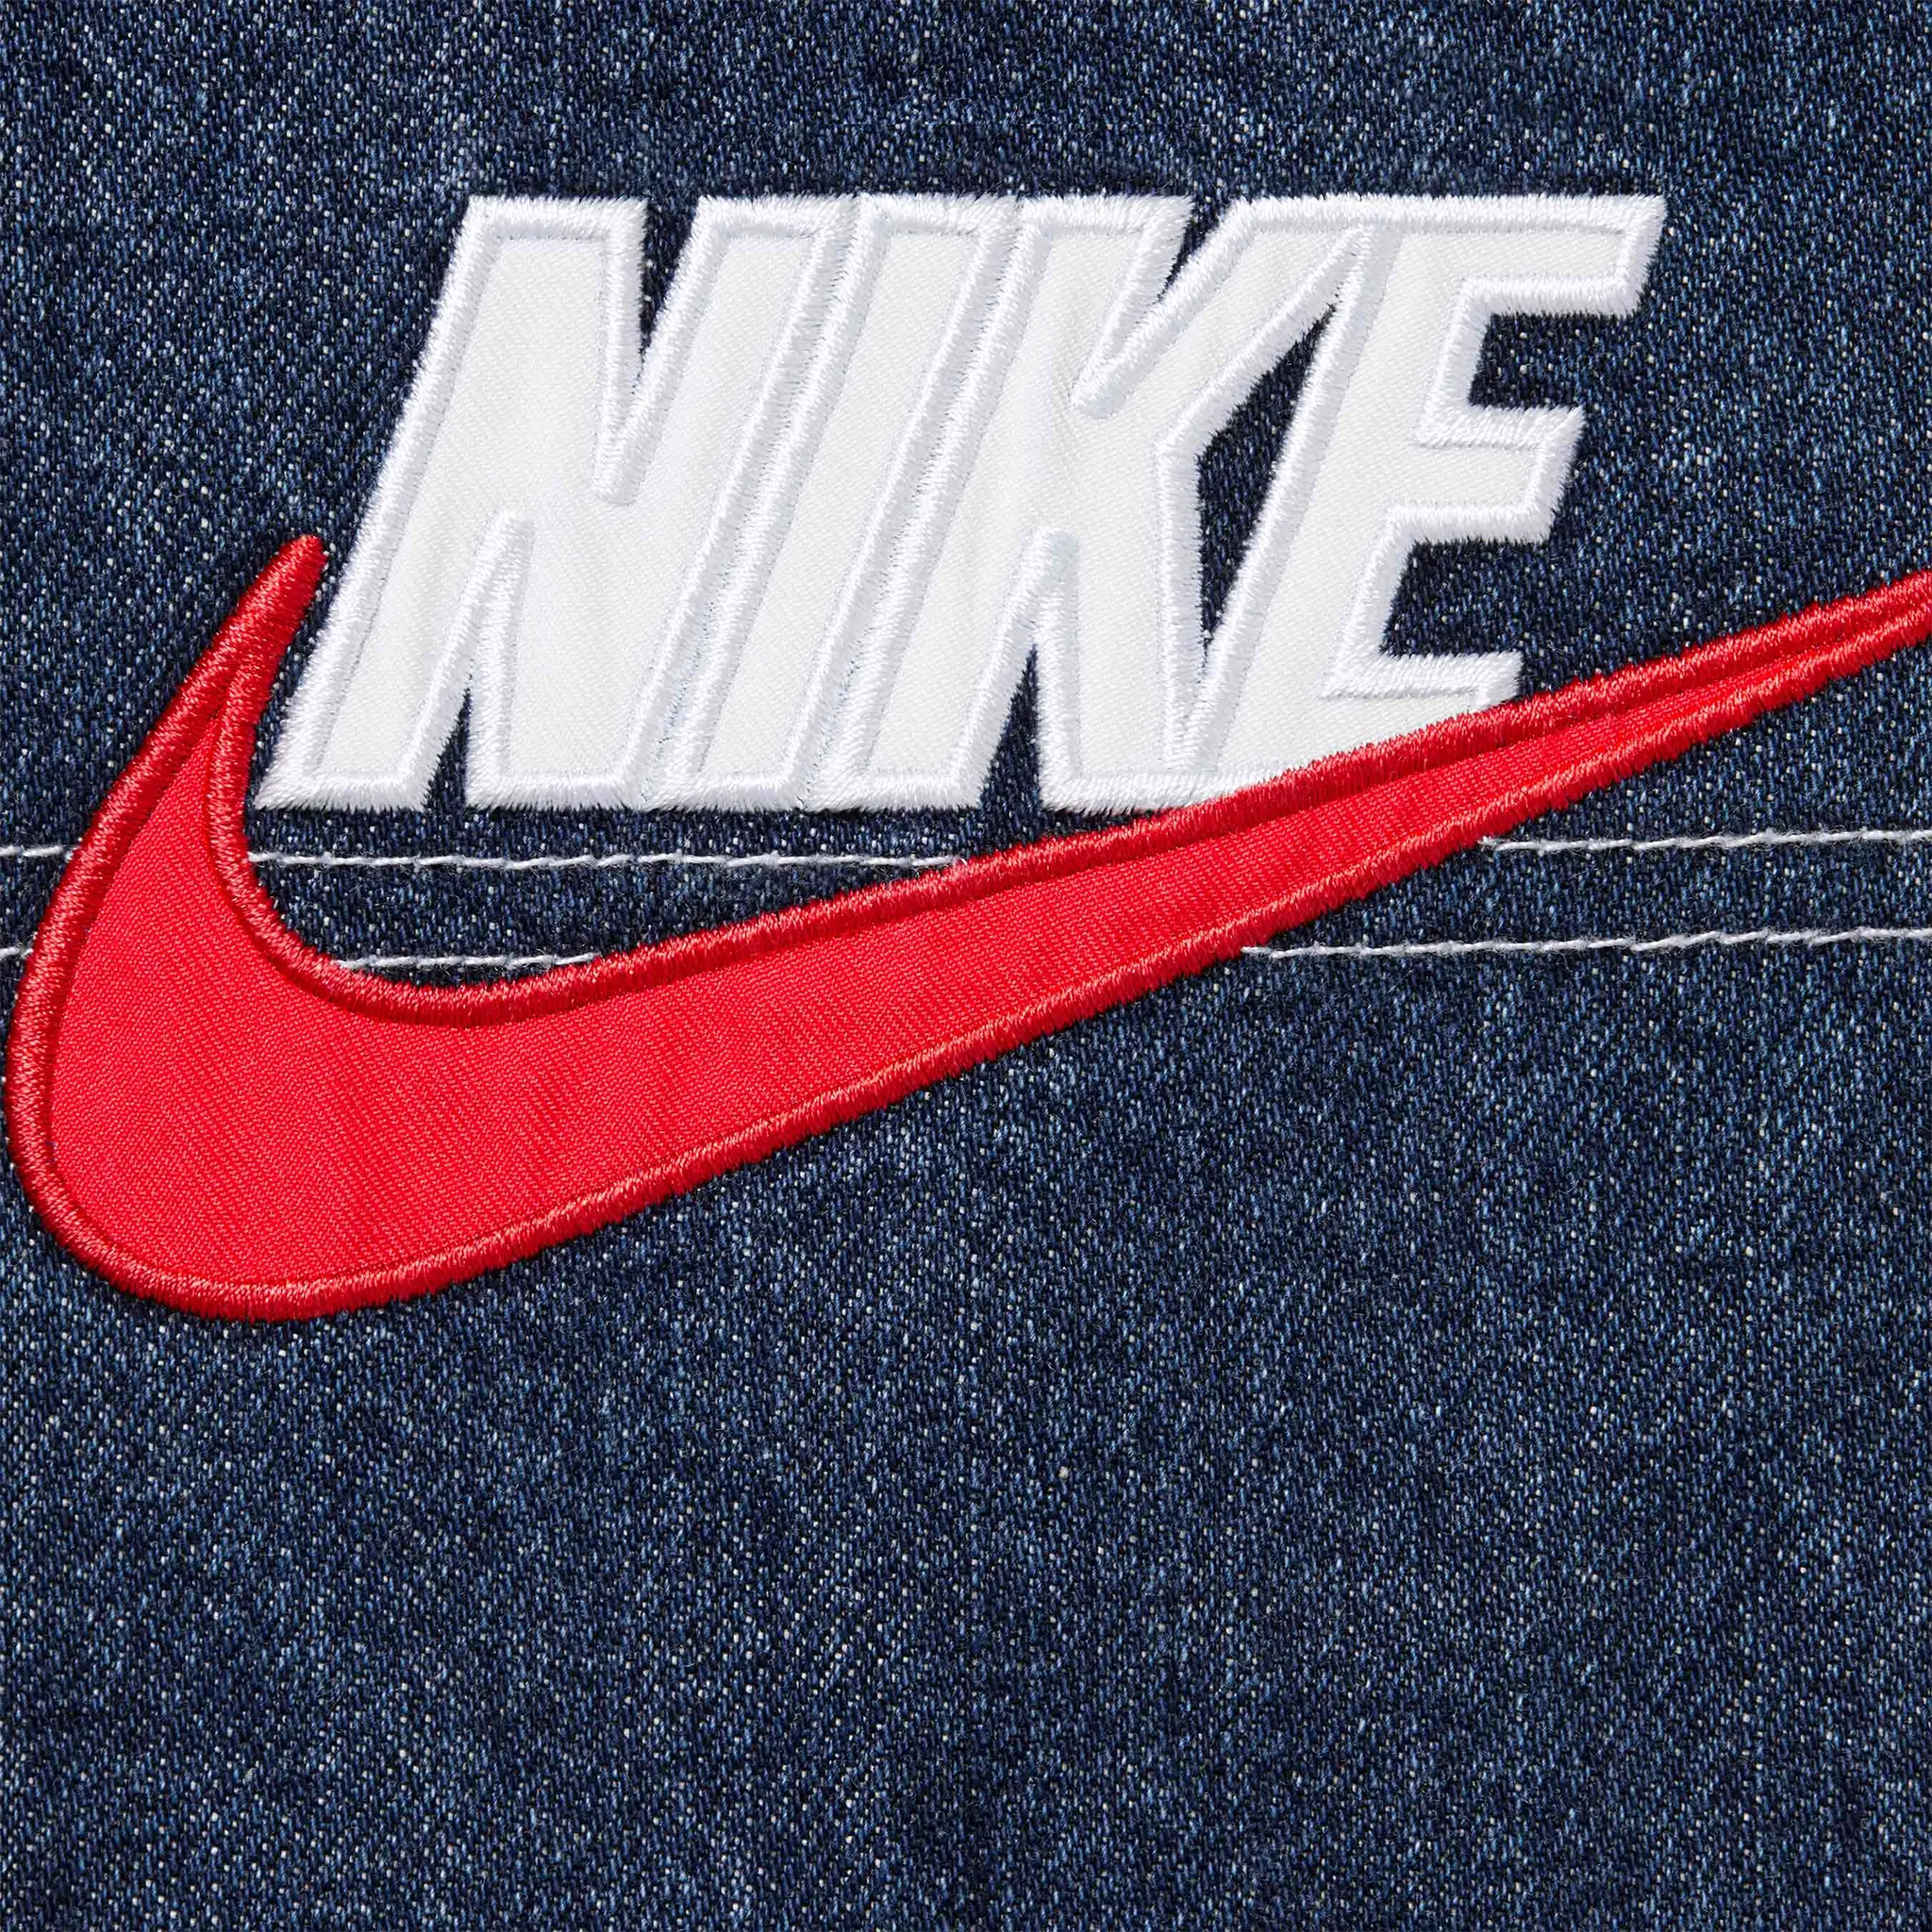 Detail view of Nike Supreme Denim Indigo Blue Shorts